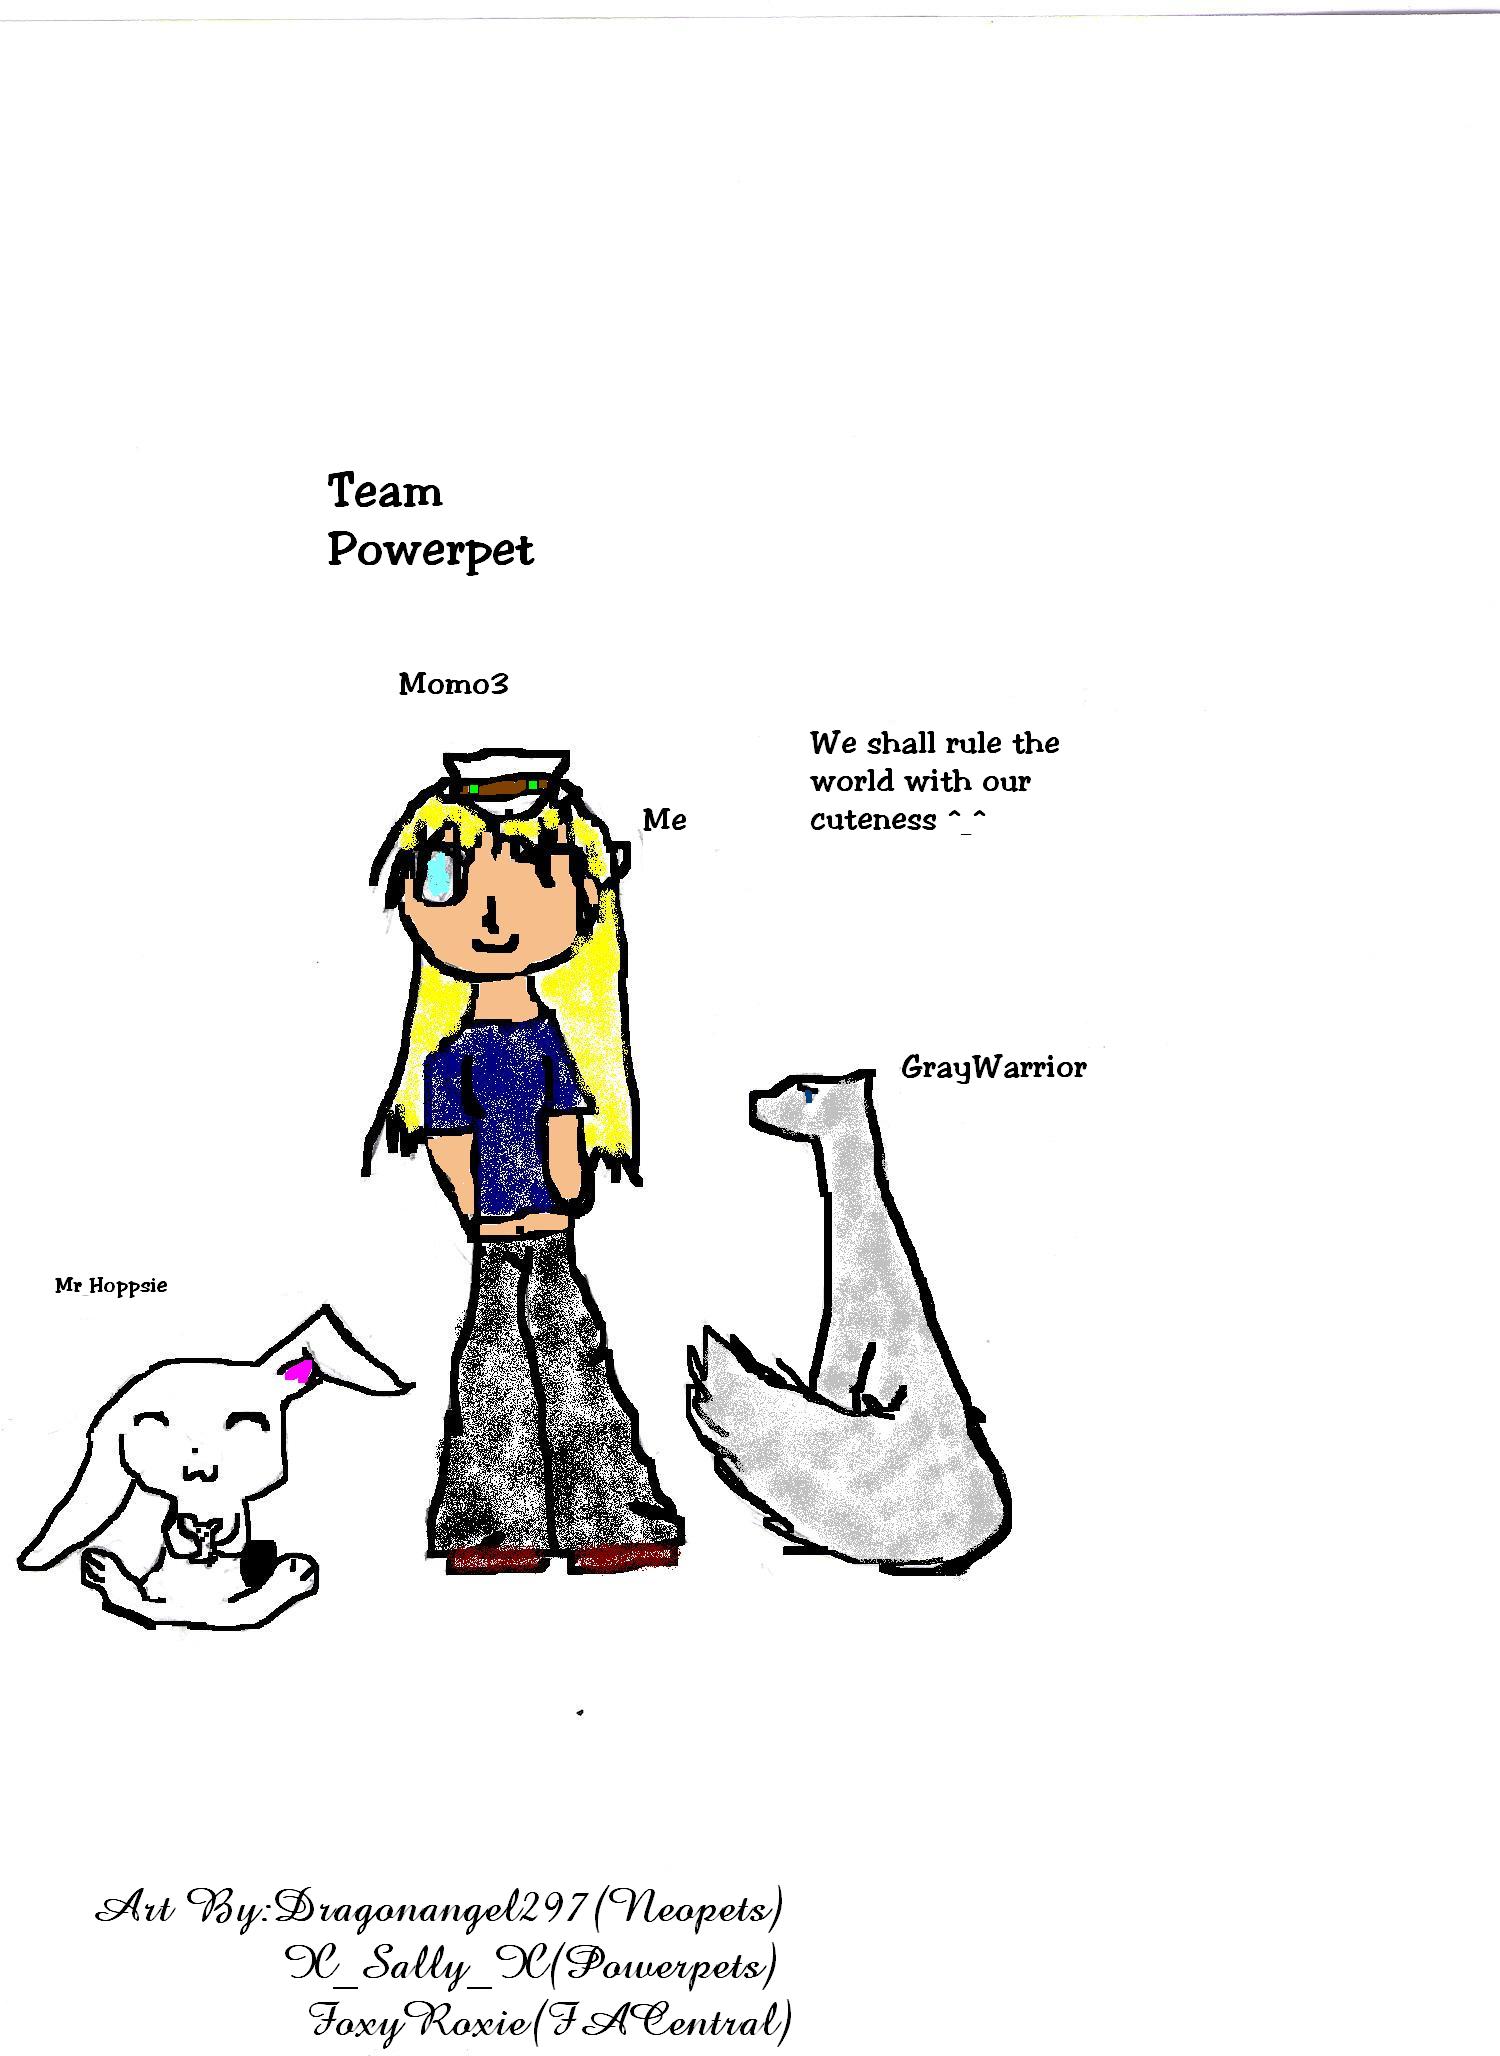 Team Powerpet by foxyroxie